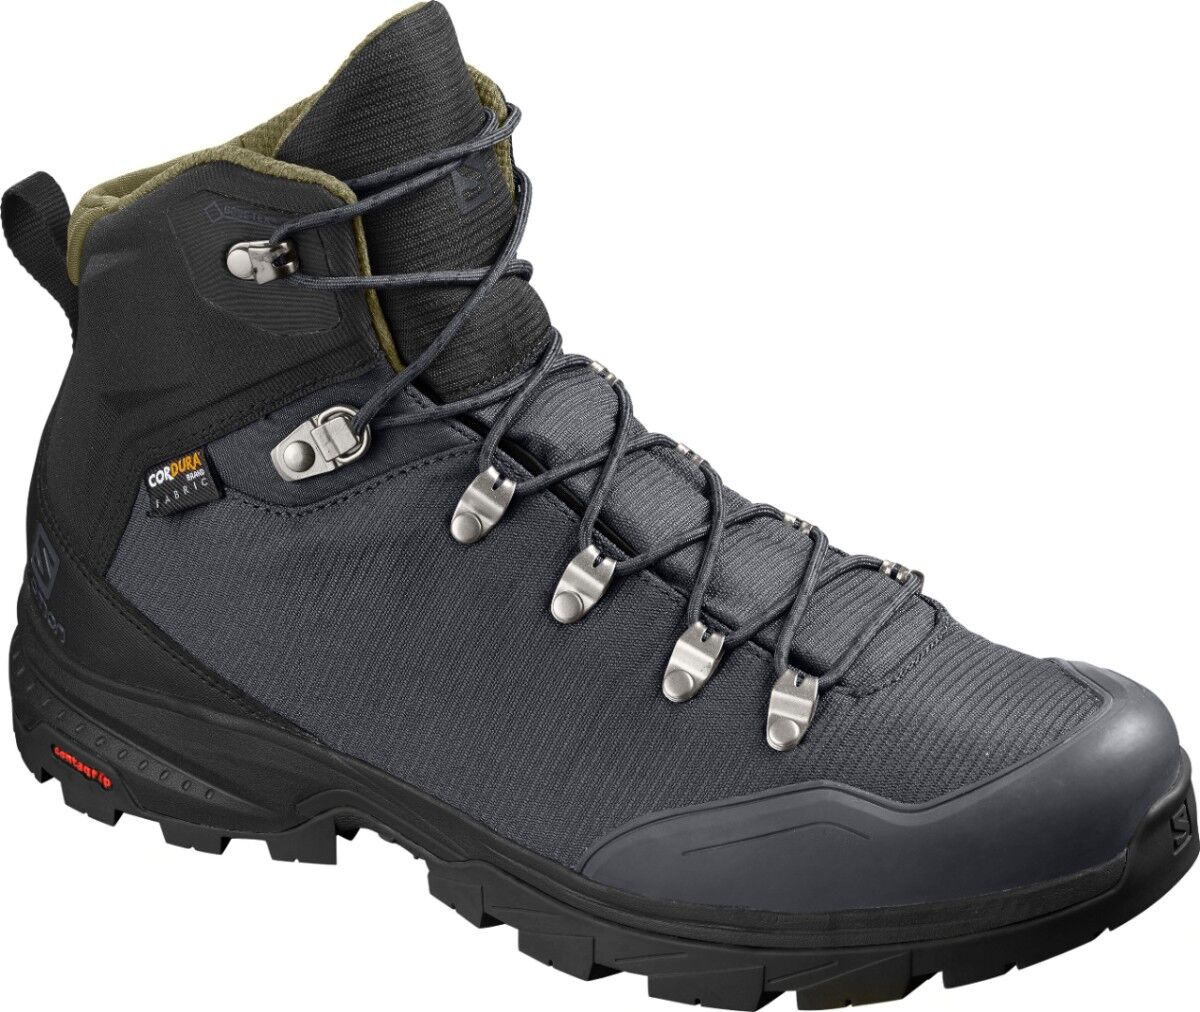 Salomon - Outback 500 GTX - Walking Boots - Men's